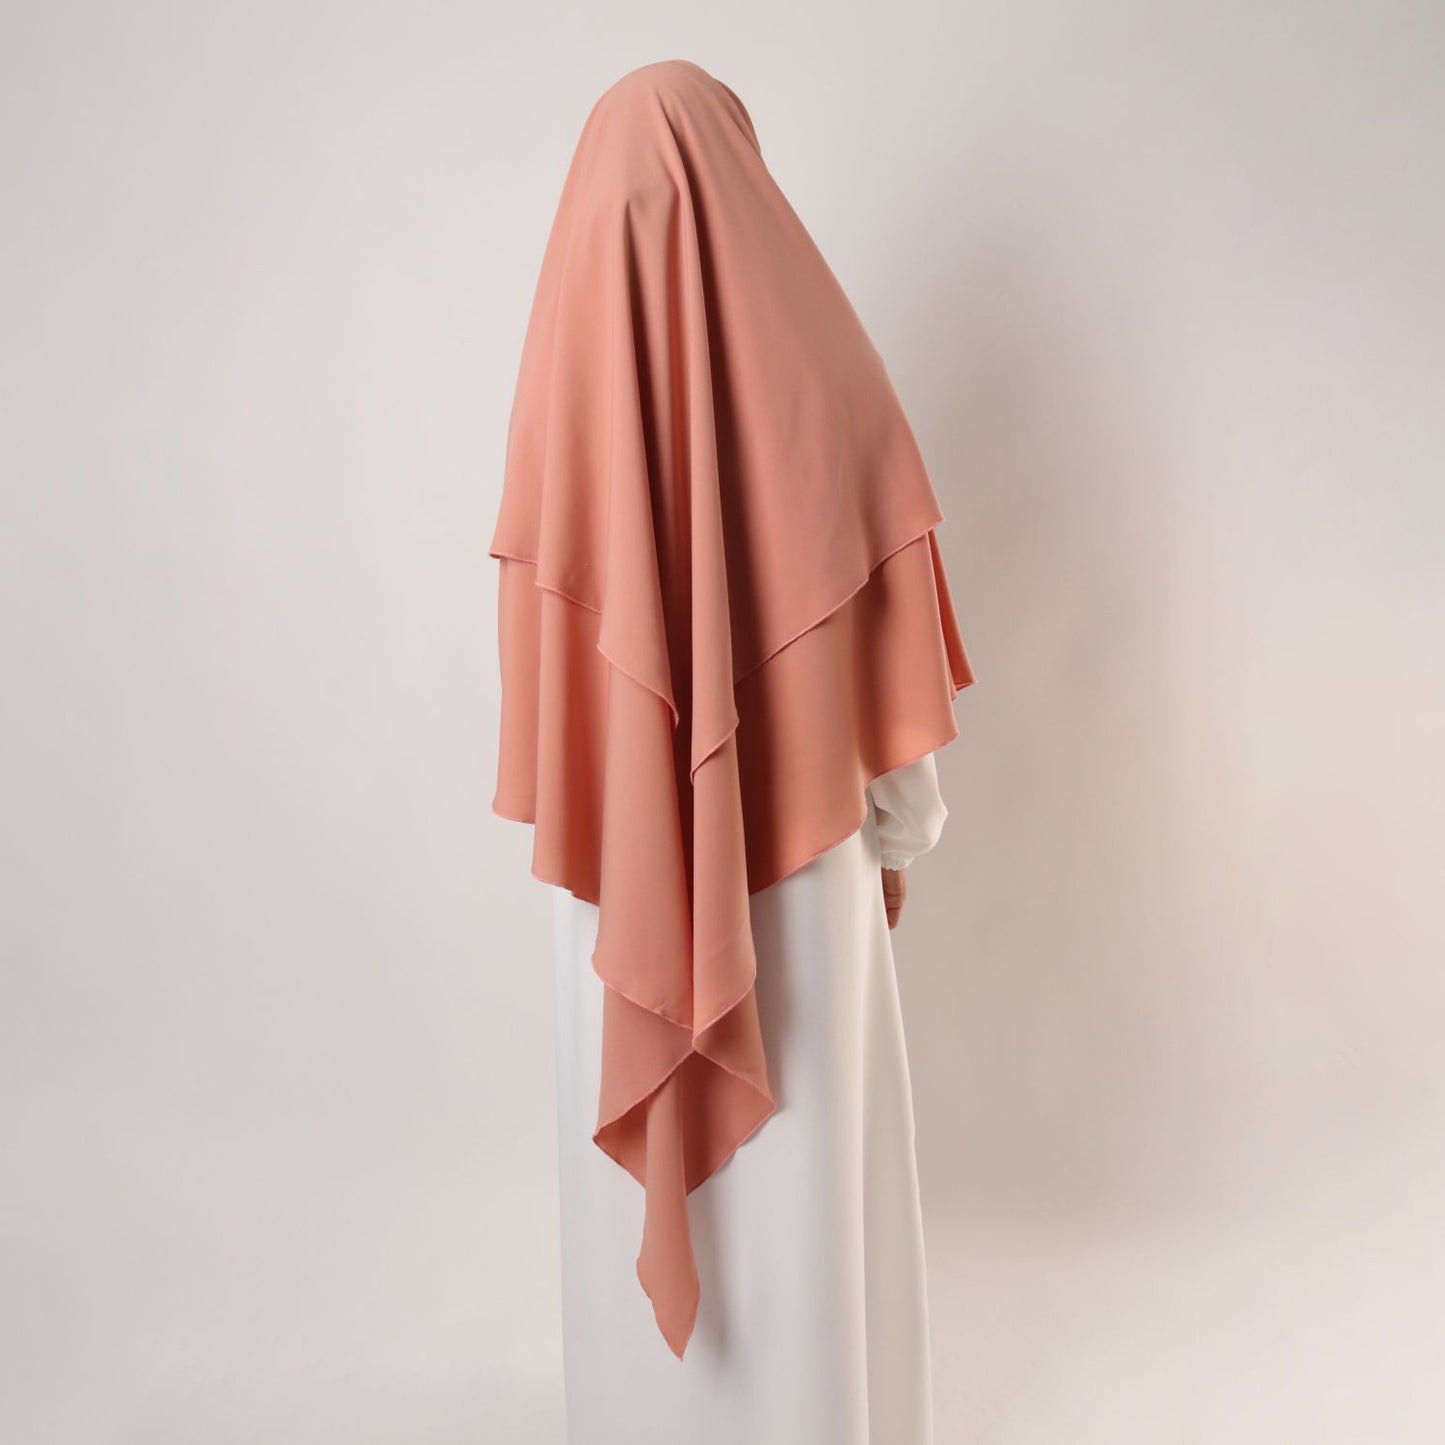 Khimar : 2 Layer Triangular Diamond Instant Khimar-Hijab-Jilbab for Girls & Women in Poppy Rose  Color | Tie Back Burkha Jilbab Khimar Style Abaya Hijab Niqab Islamic Modest Wear